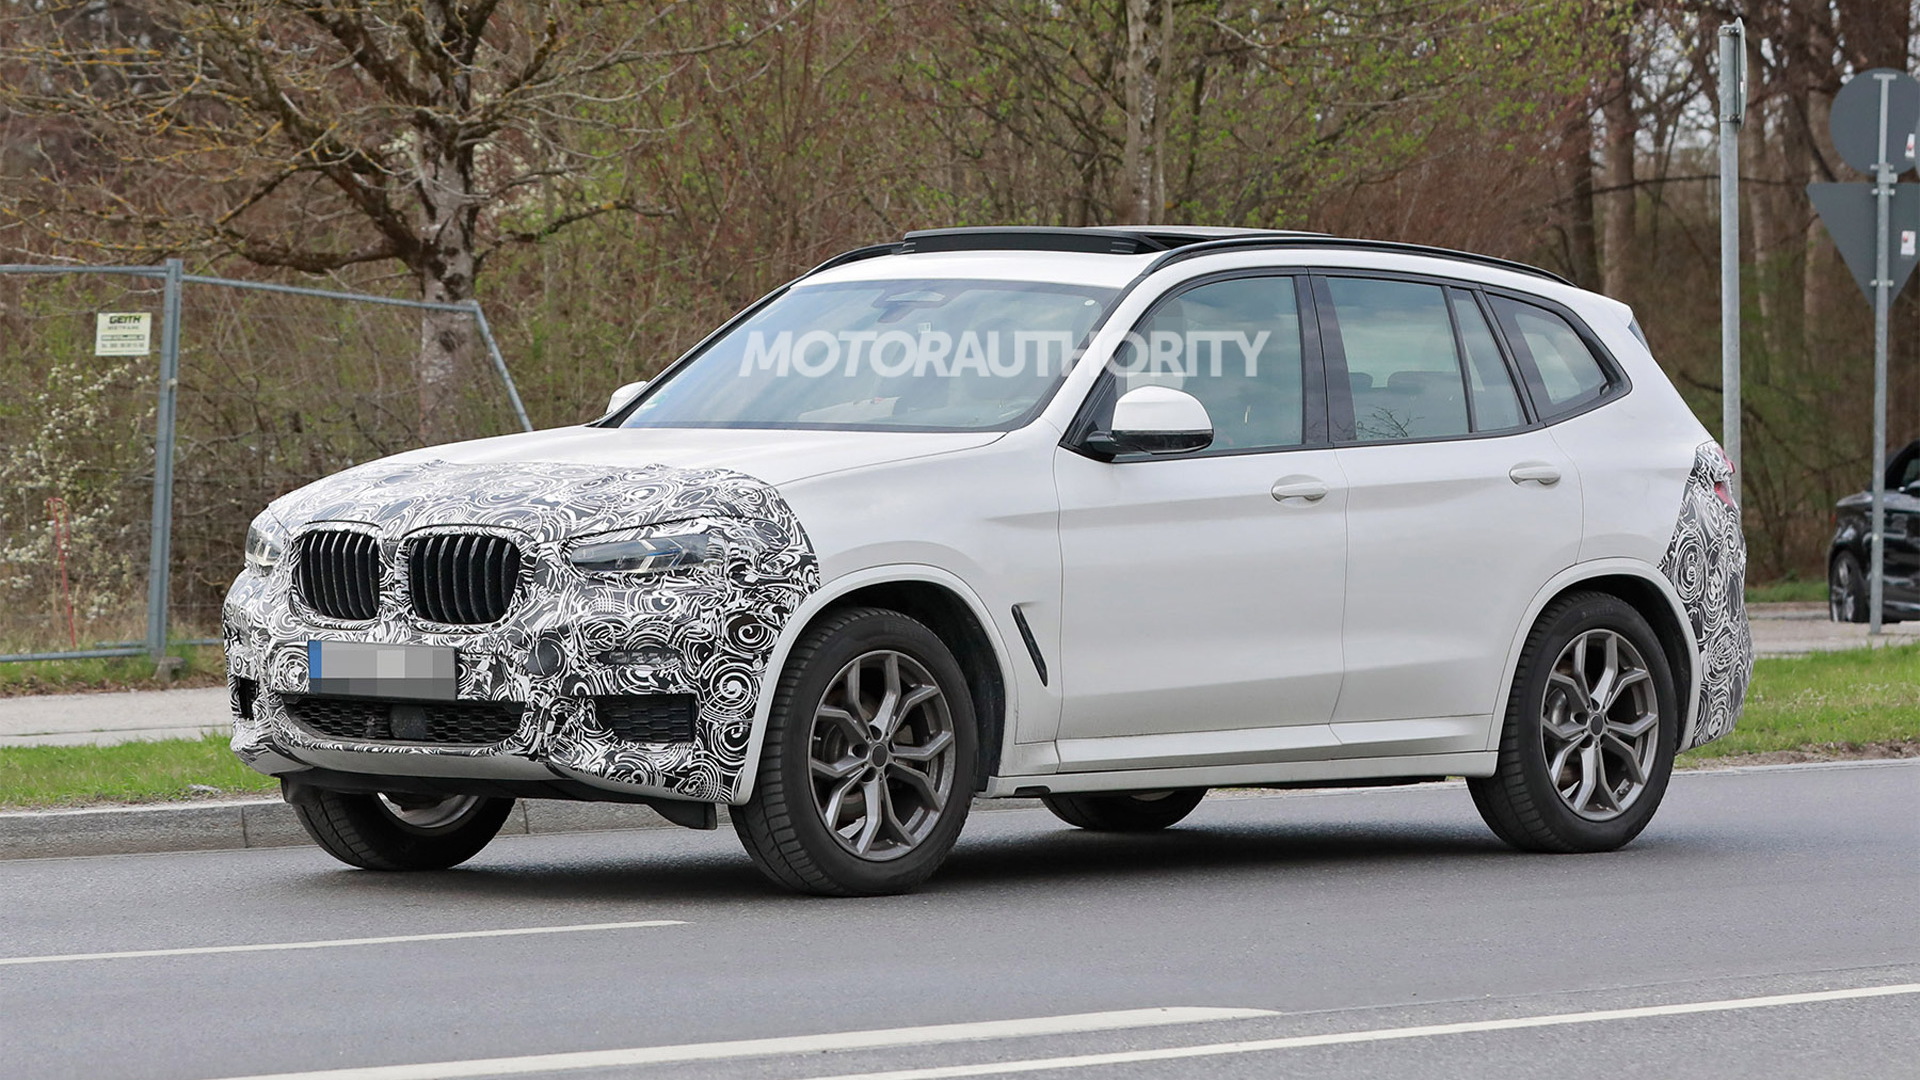 2022 BMW X3 facelift spy shots - Photo credit: S. Baldauf/SB-Medien